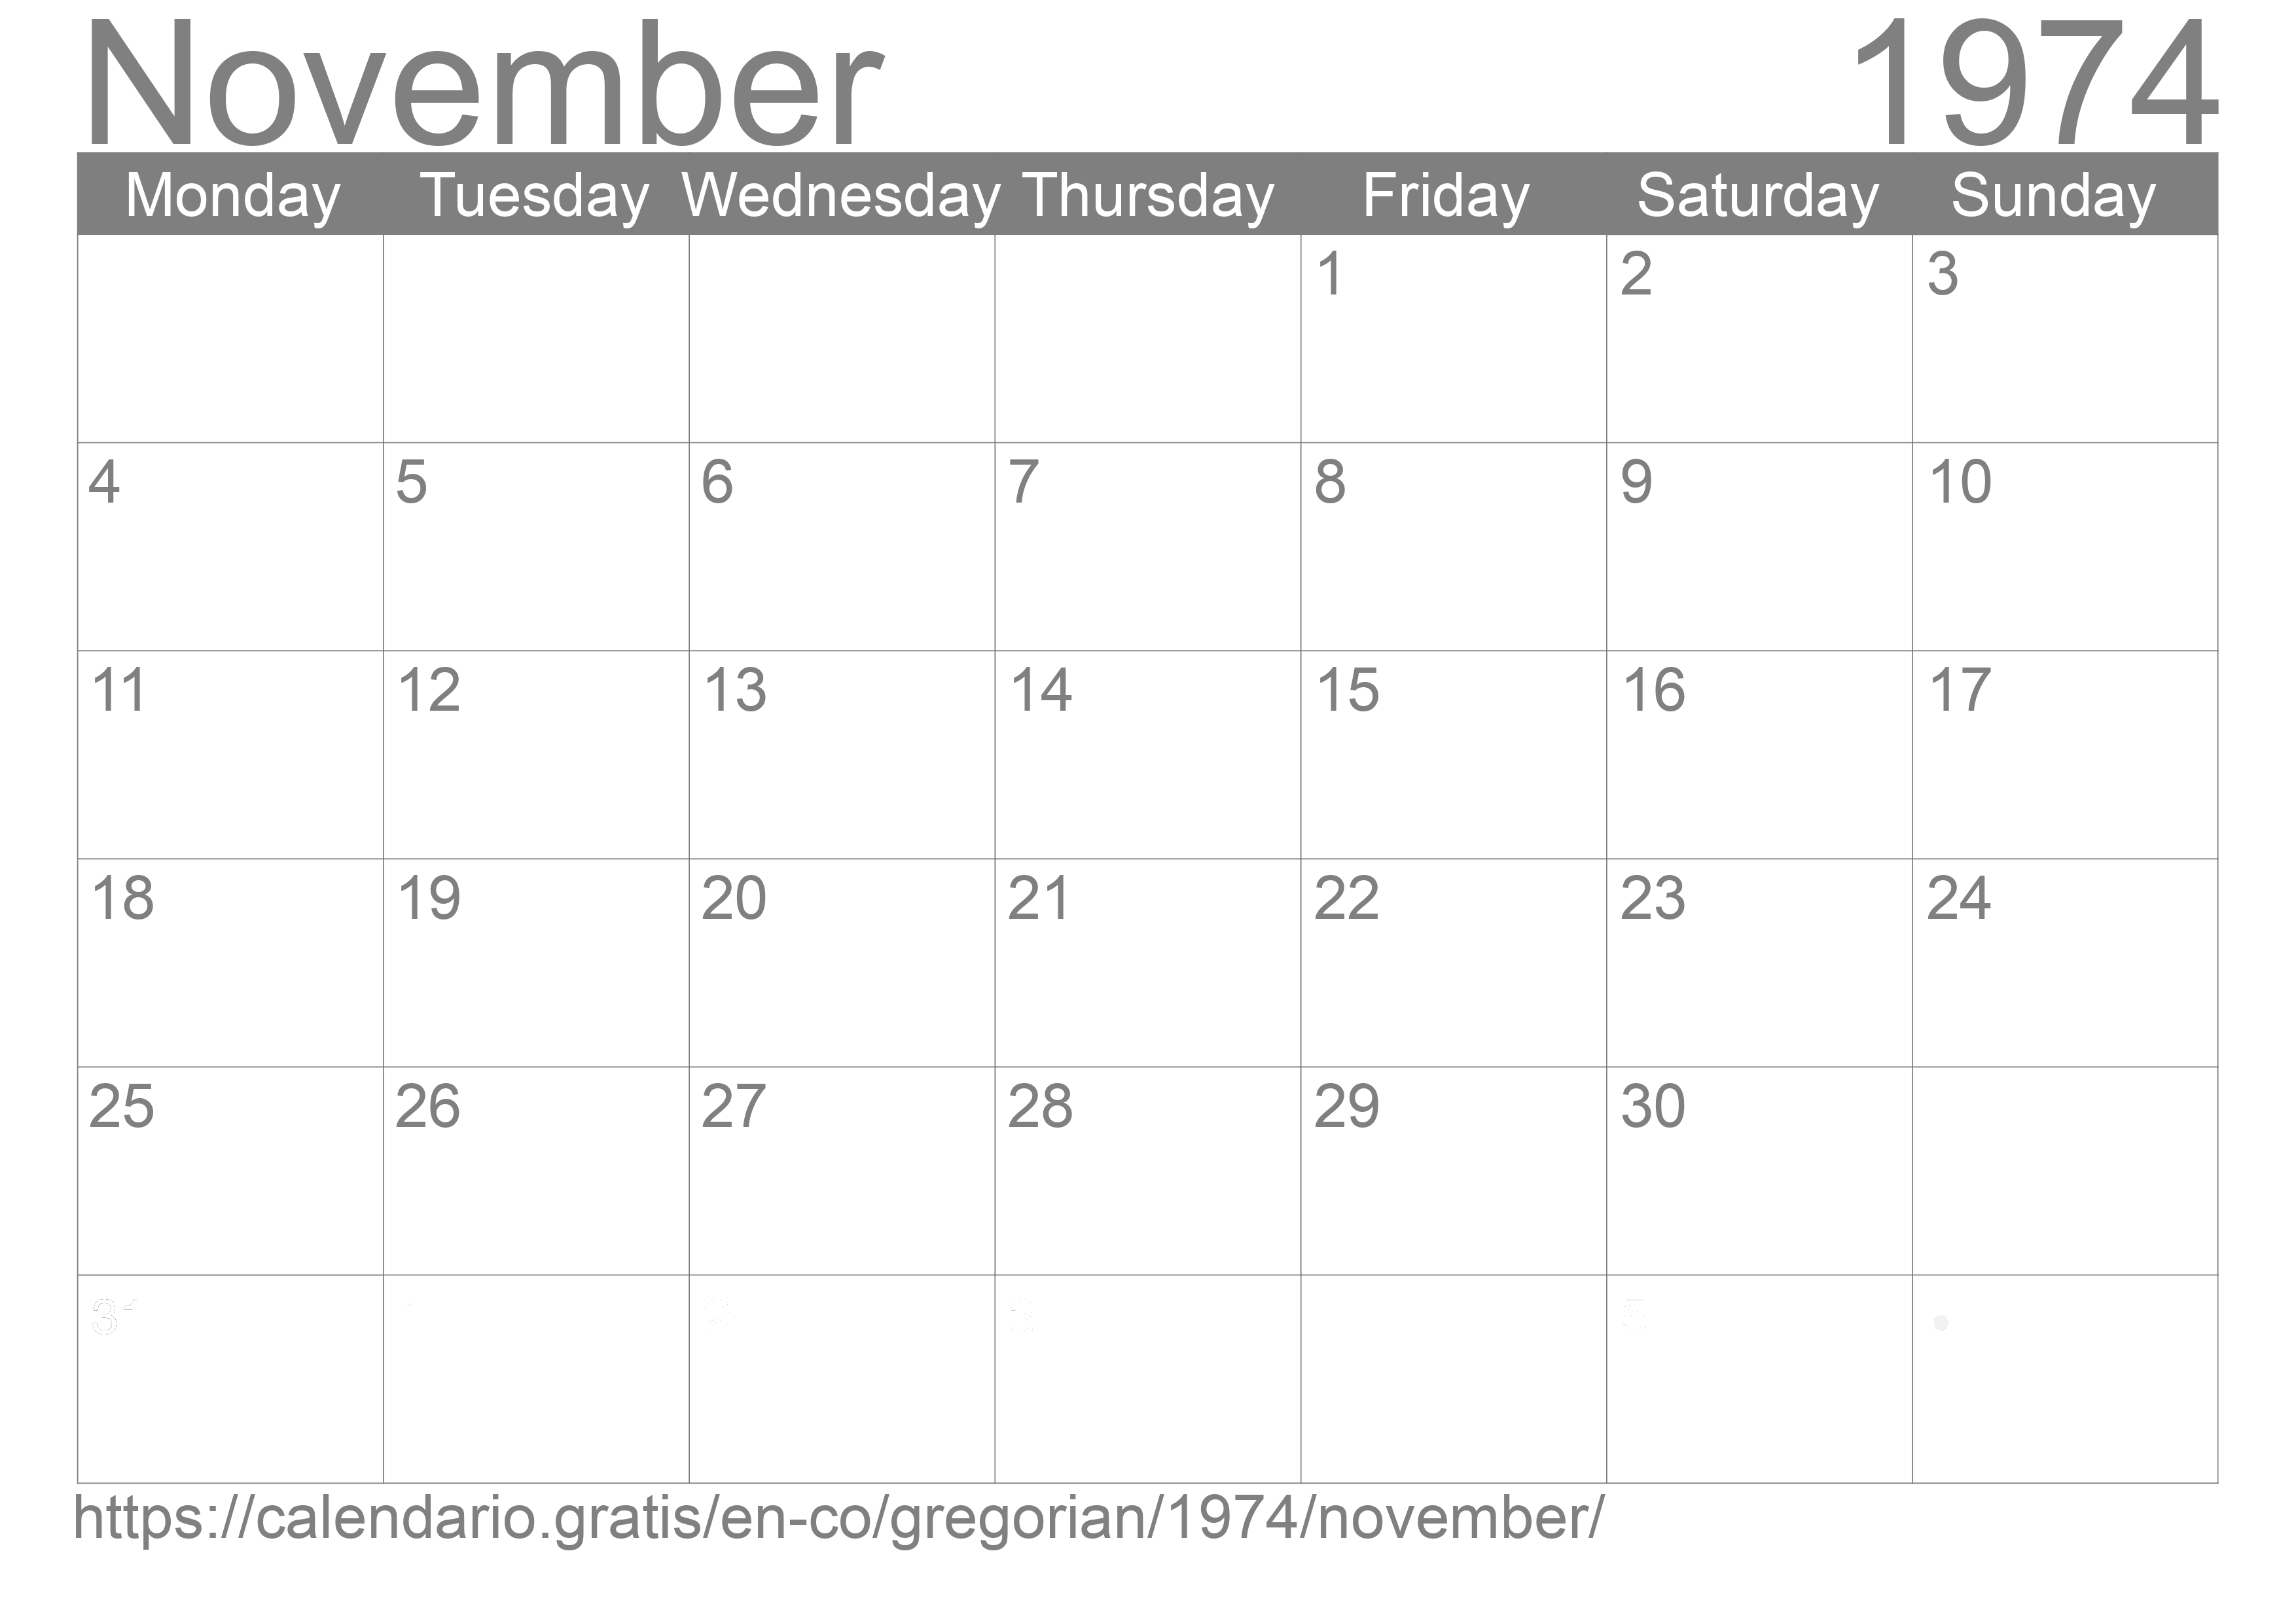 Calendar November 1974 to print